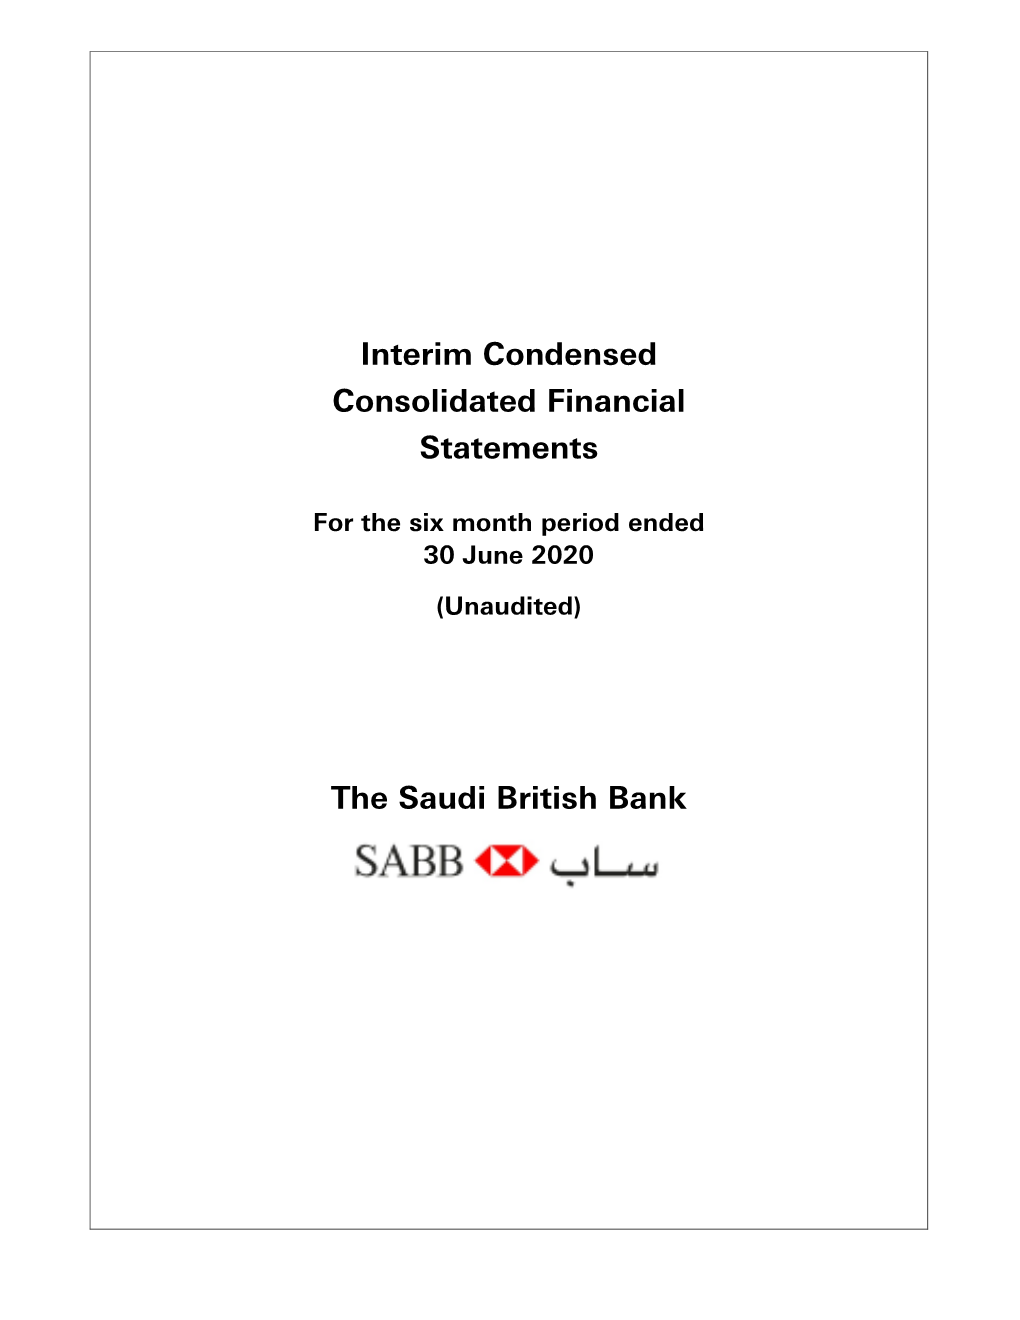 Interim Condensed Consolidated Financial Statements the Saudi British Bank